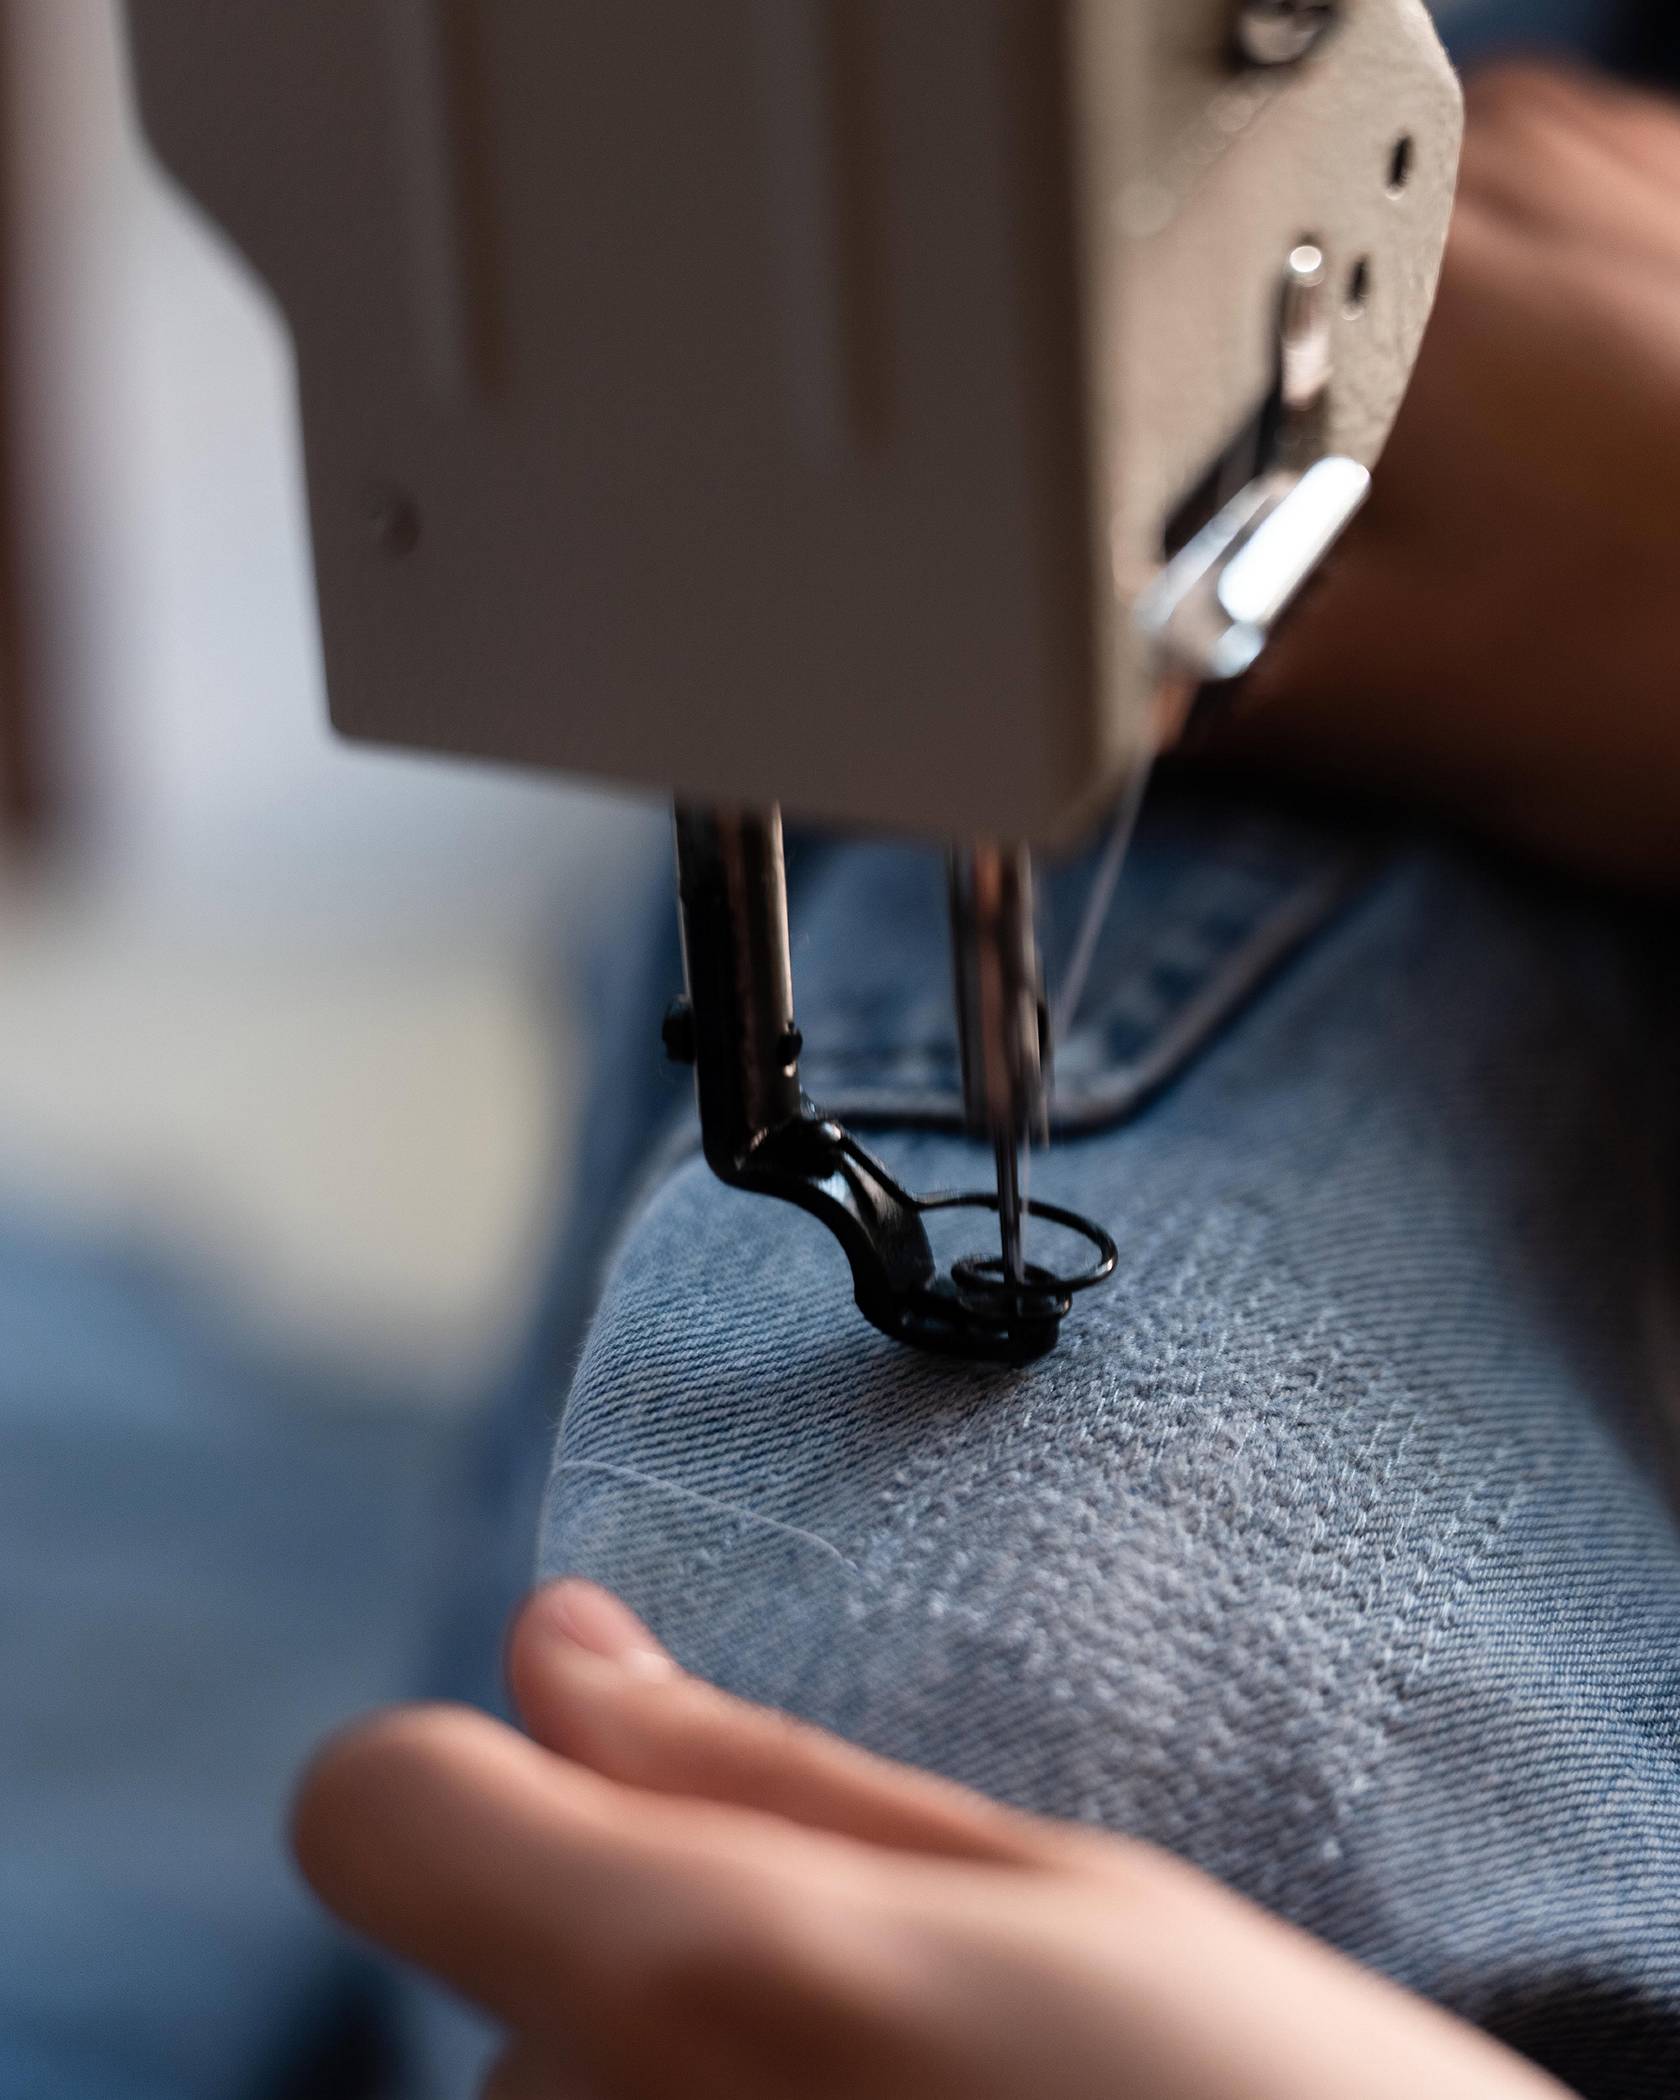 Denim being sewn